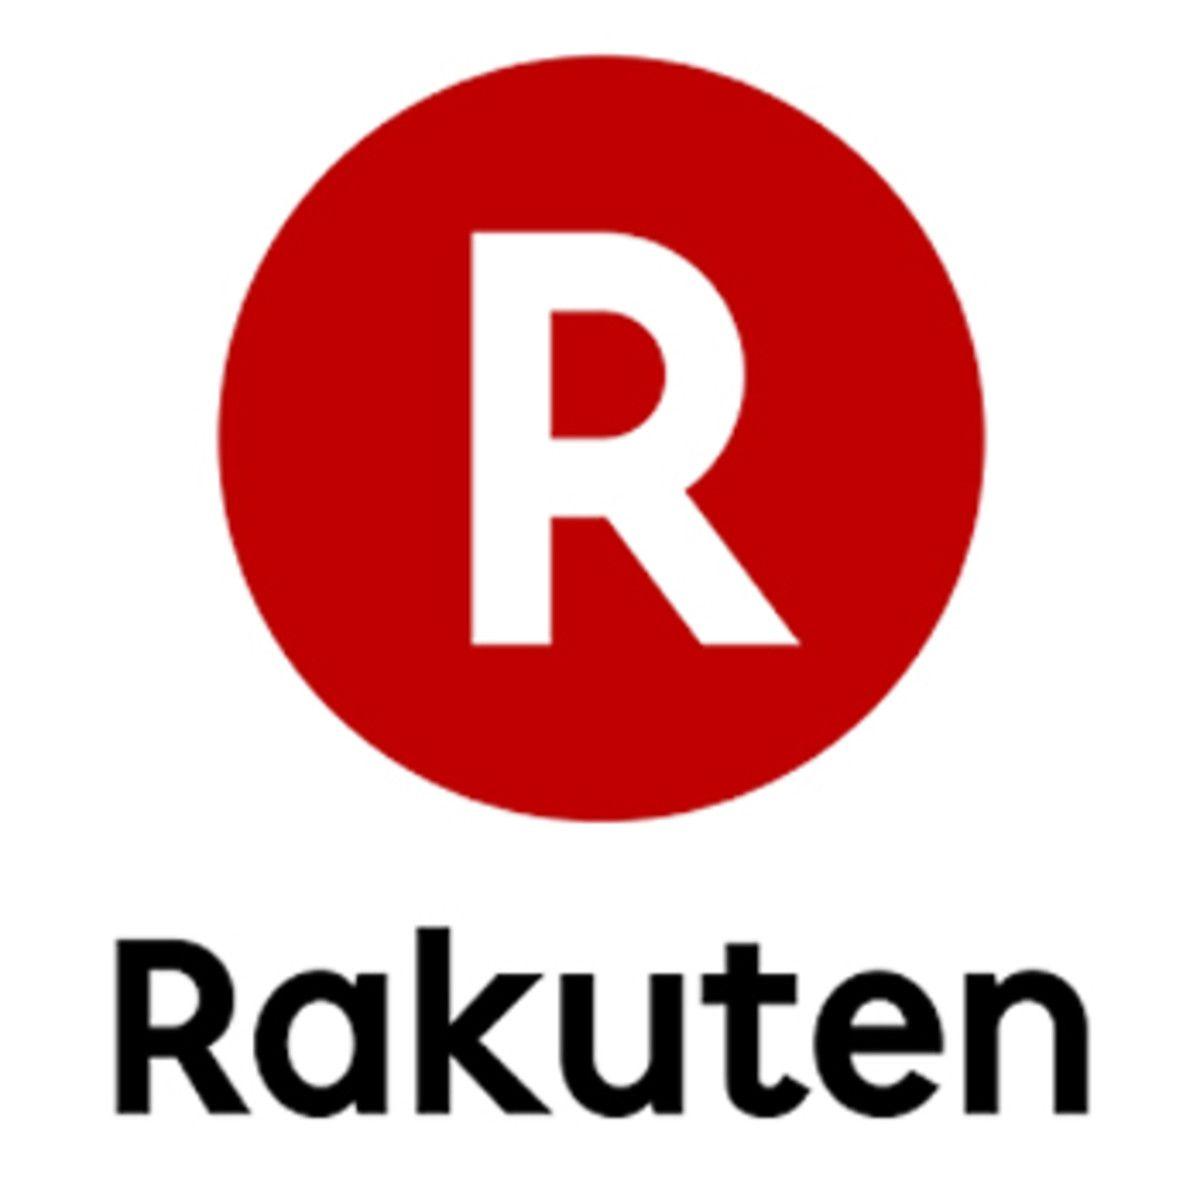 Rakuten Logo - eBay rival Rakuten to close its UK marketplace